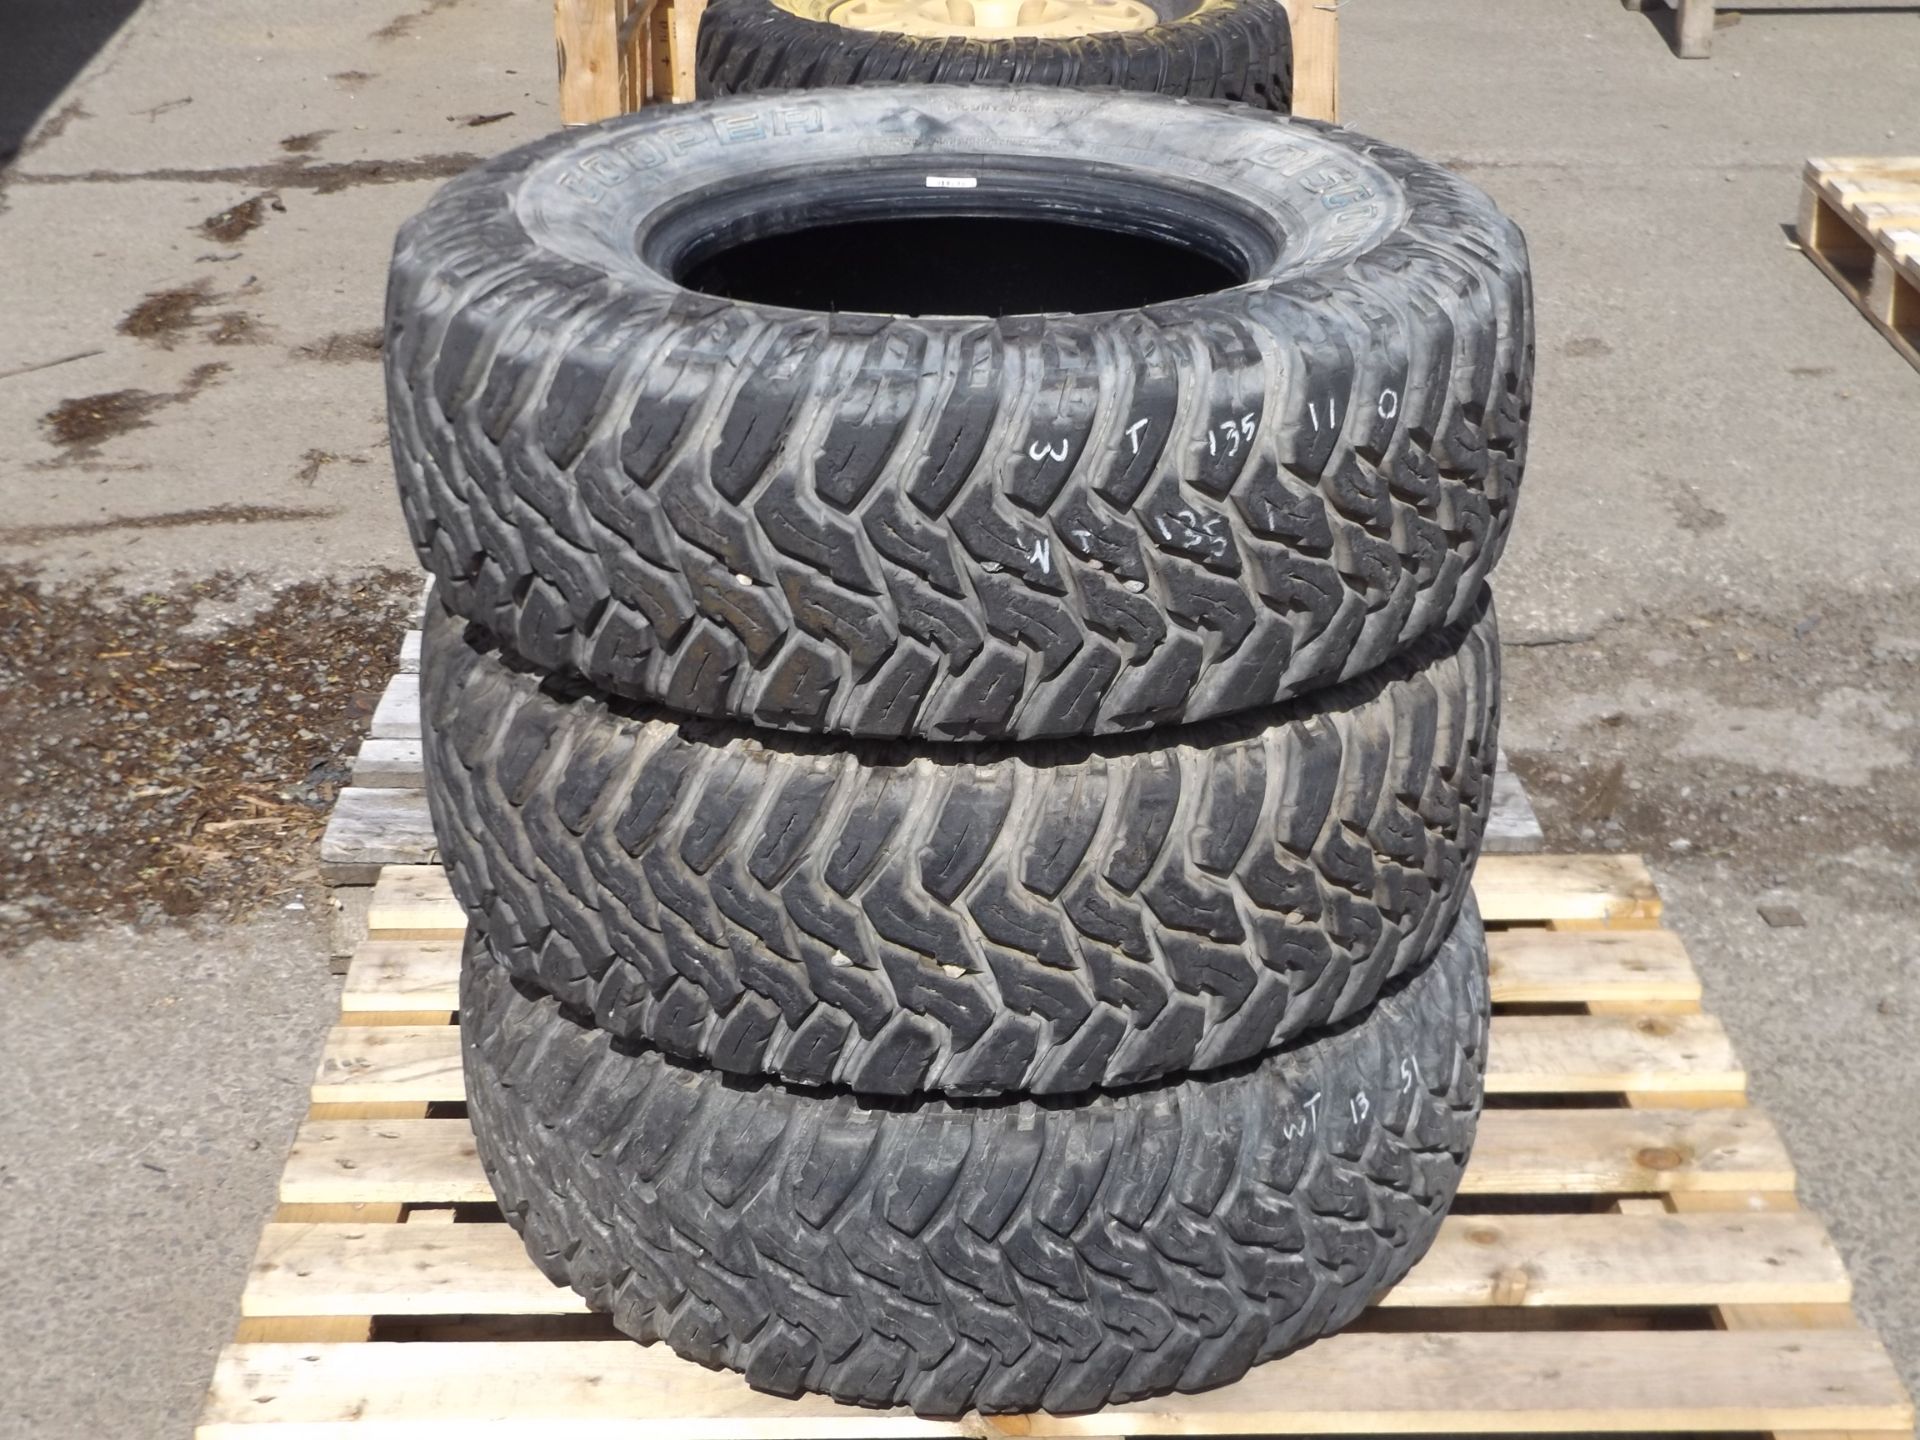 3 x Coopers Discoverer STT LT265/75 R16 Tyres